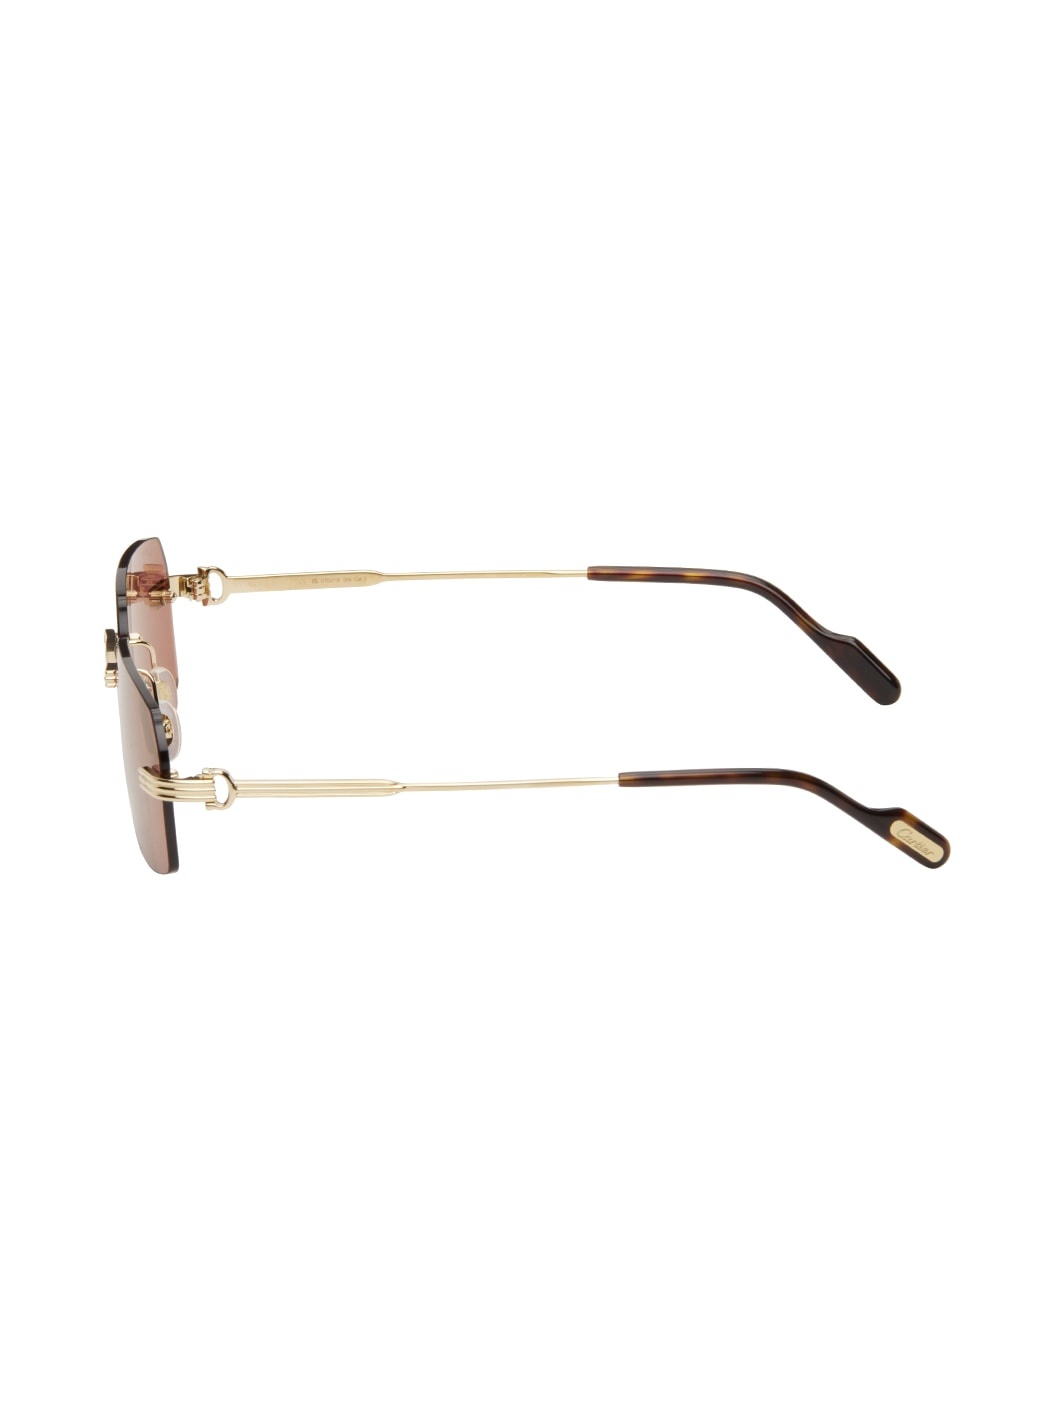 Gold 'Première de Cartier' Rectangular Sunglasses - 3